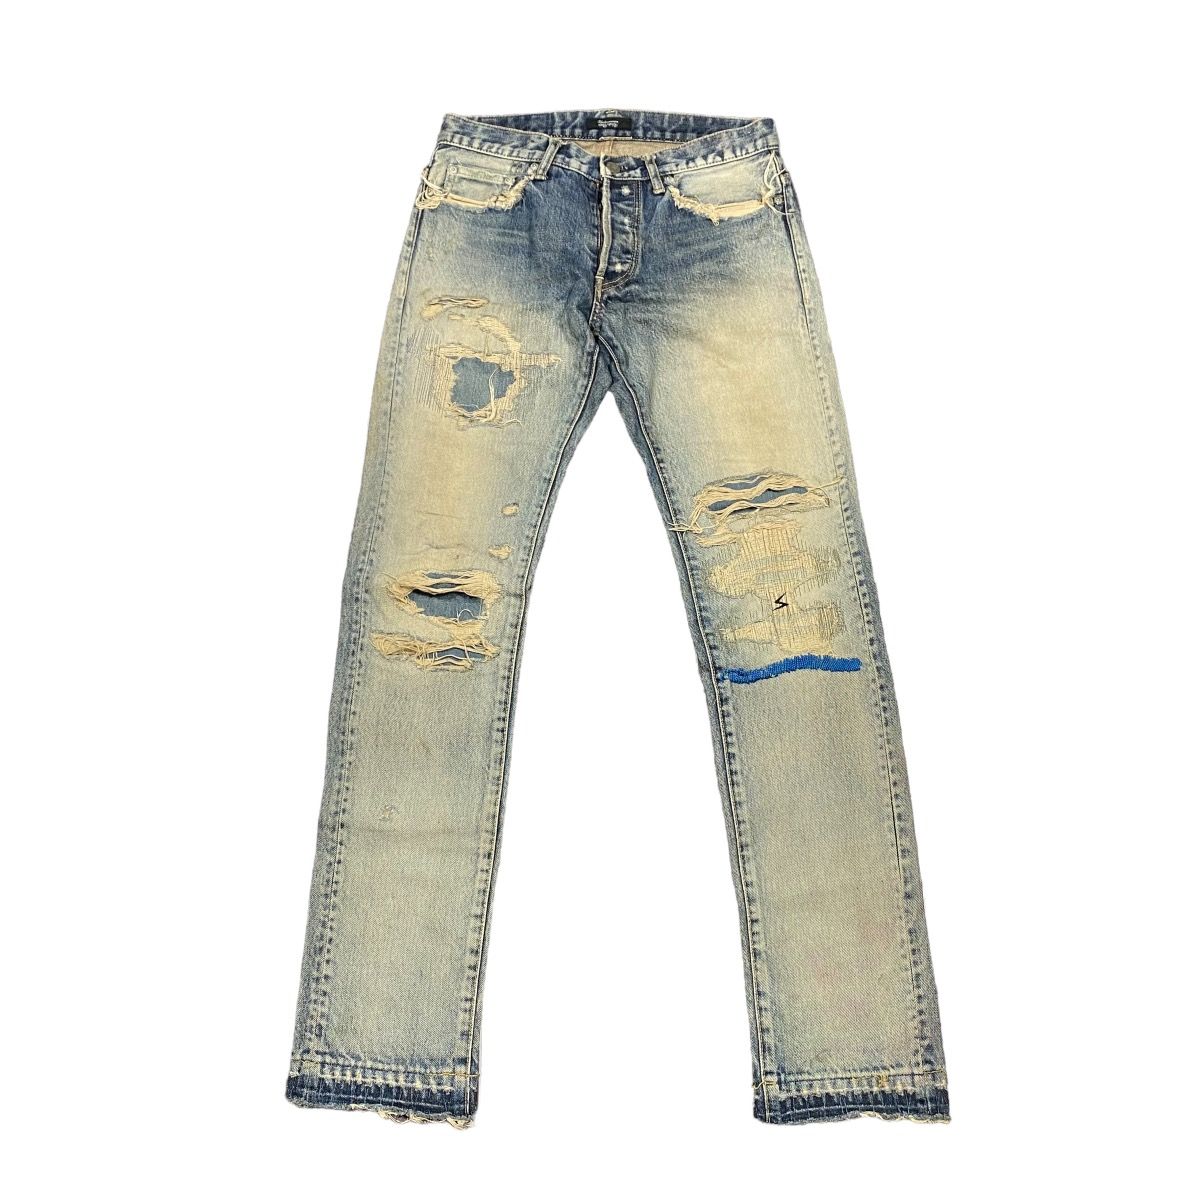 ❗️❗️❗️Rare Item Undercover 68 Blue Yarn Jeans - 1